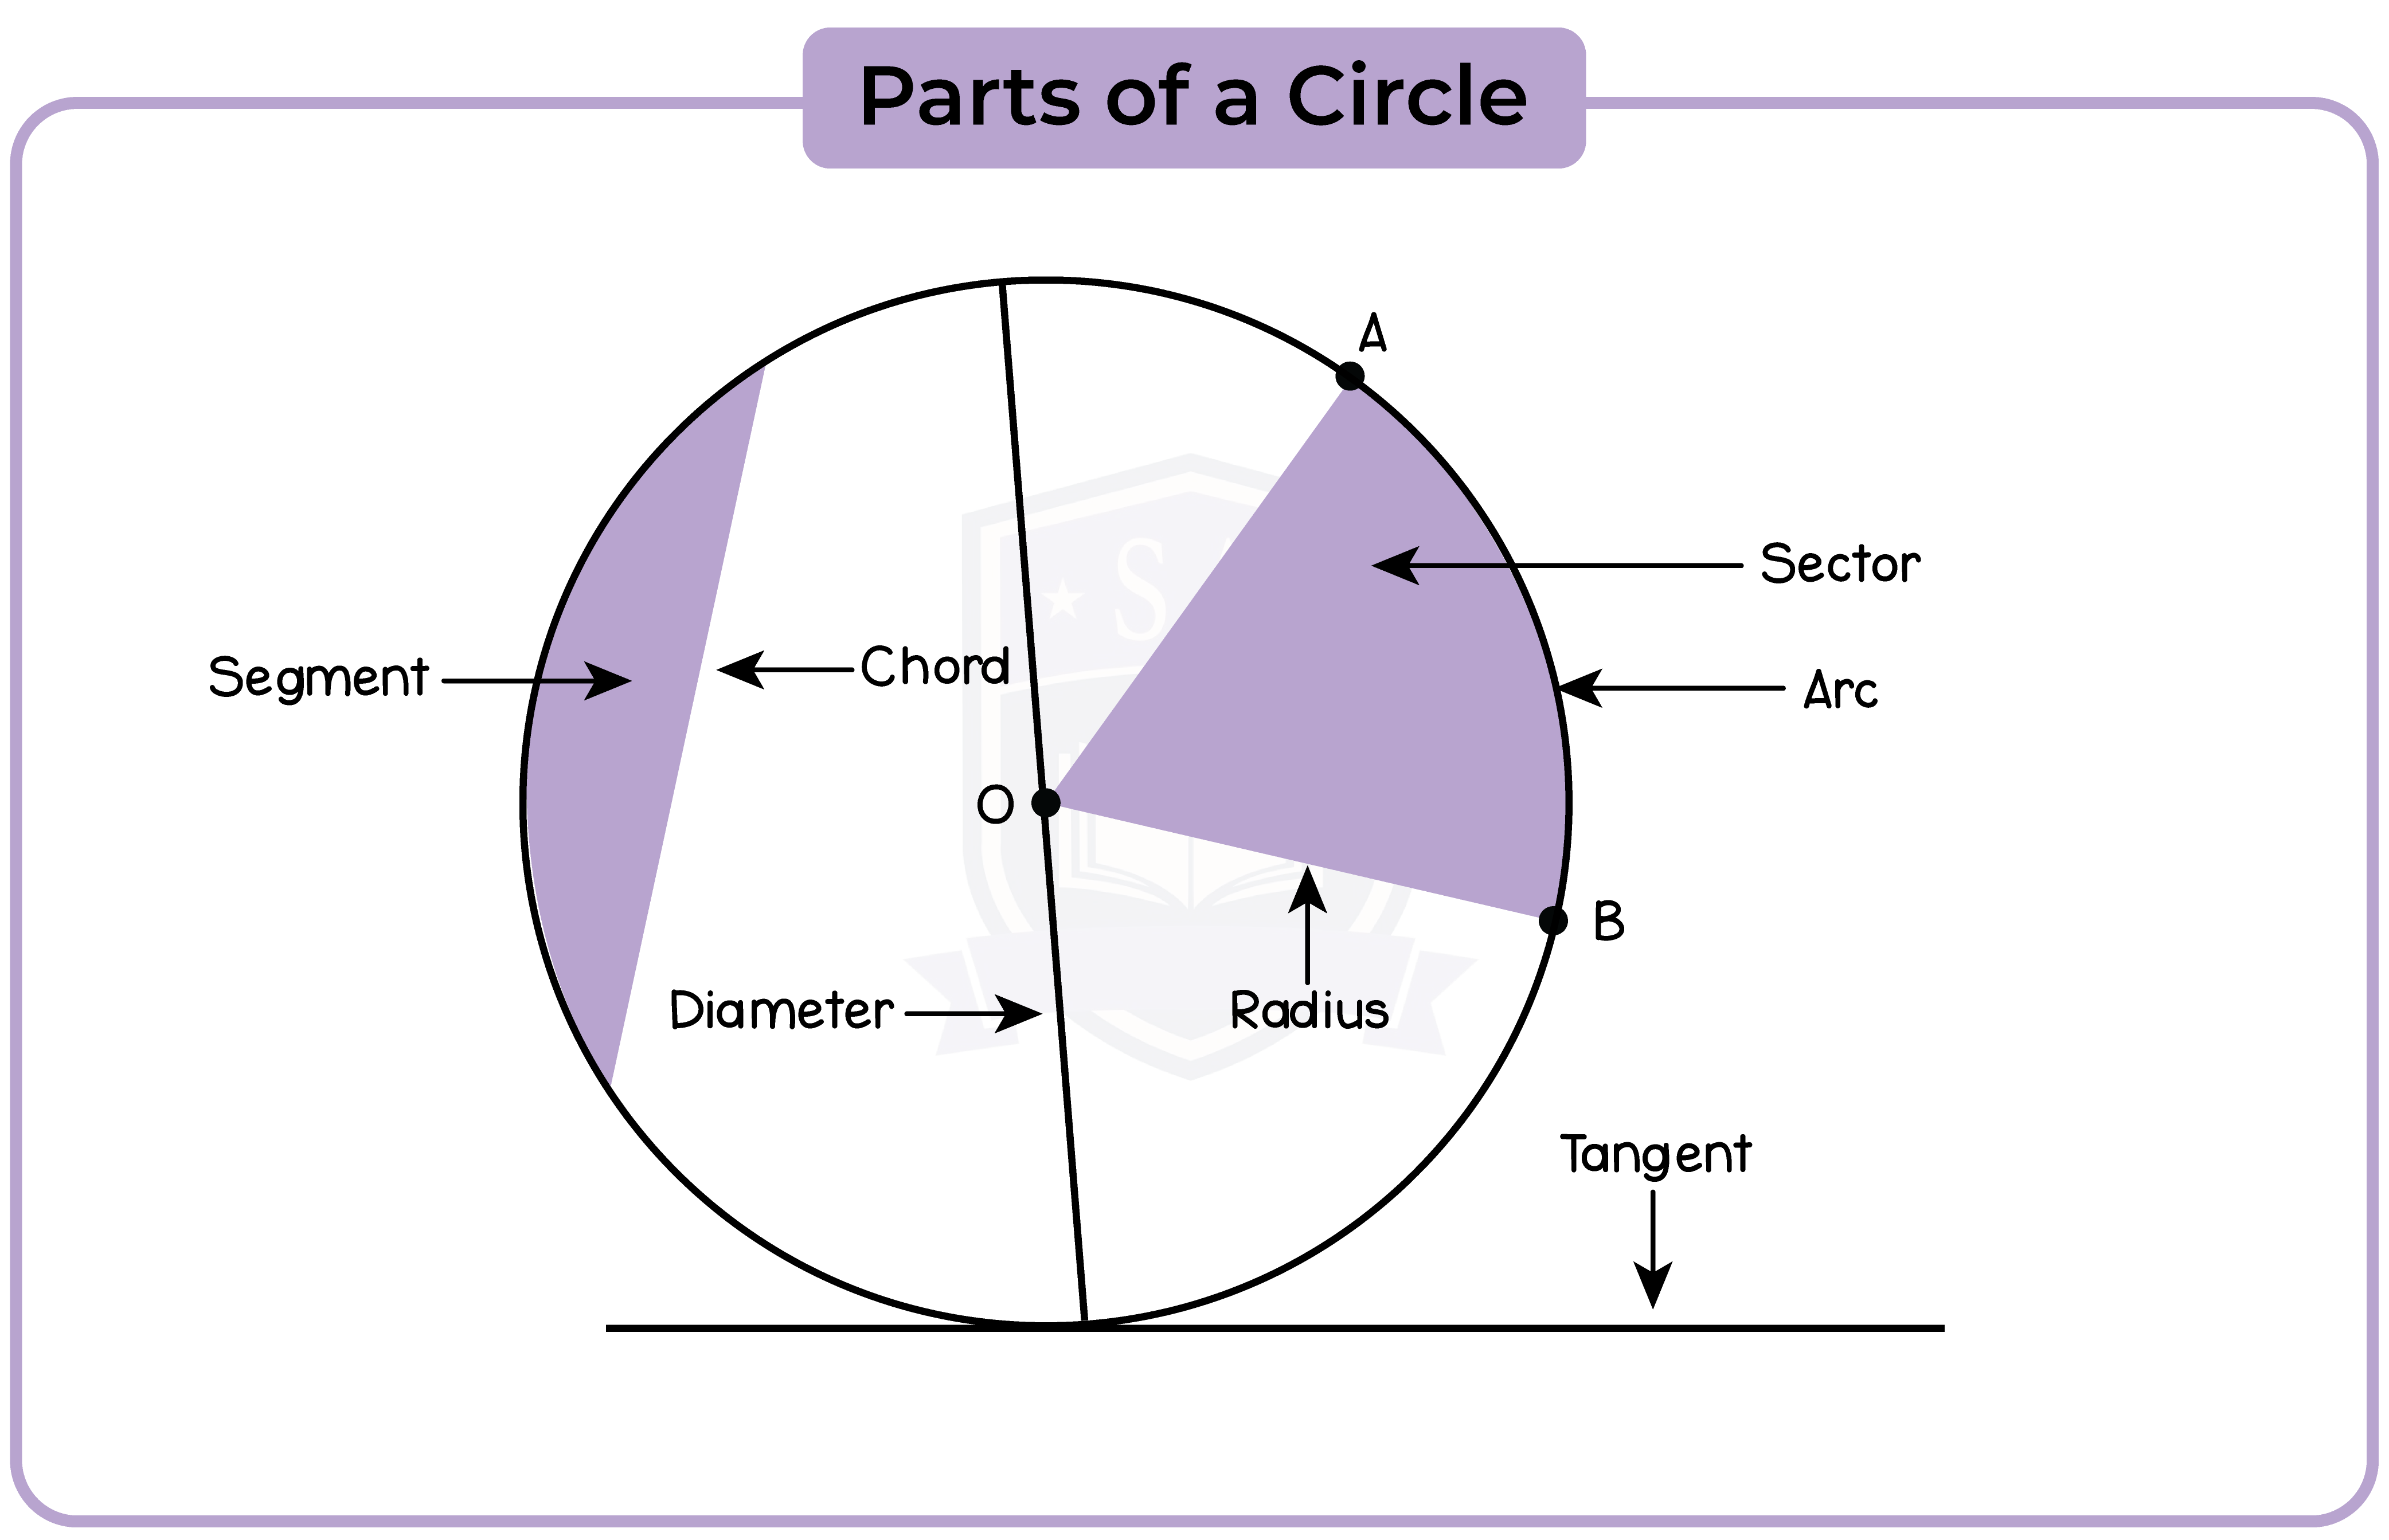 edexcel_igcse_mathematics a_topic 30_circle properties_001_Parts of a Circle